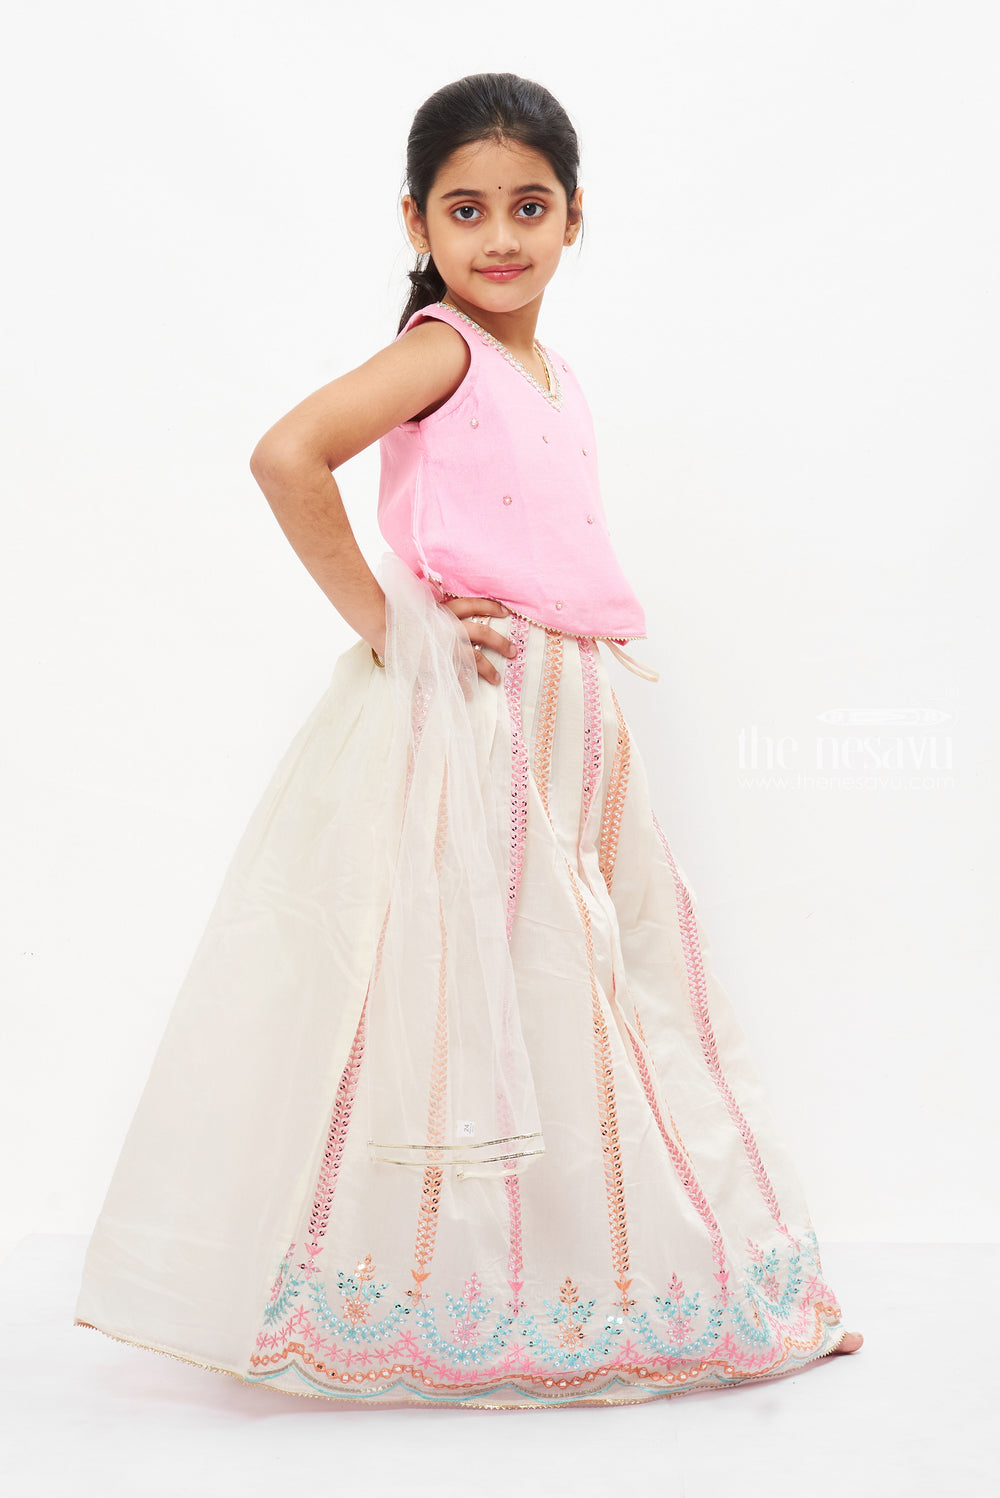 The Nesavu Girls Lehenga Choli Girls Pink & White Embroidered Chaniya Choli: Perfect for Diwali, Eid & Festive Occasions Nesavu Buy Girls' Festive Lehenga Choli: Embroidered Ethnic Wear for Diwali, Eid & More Festivals | The Nesavu